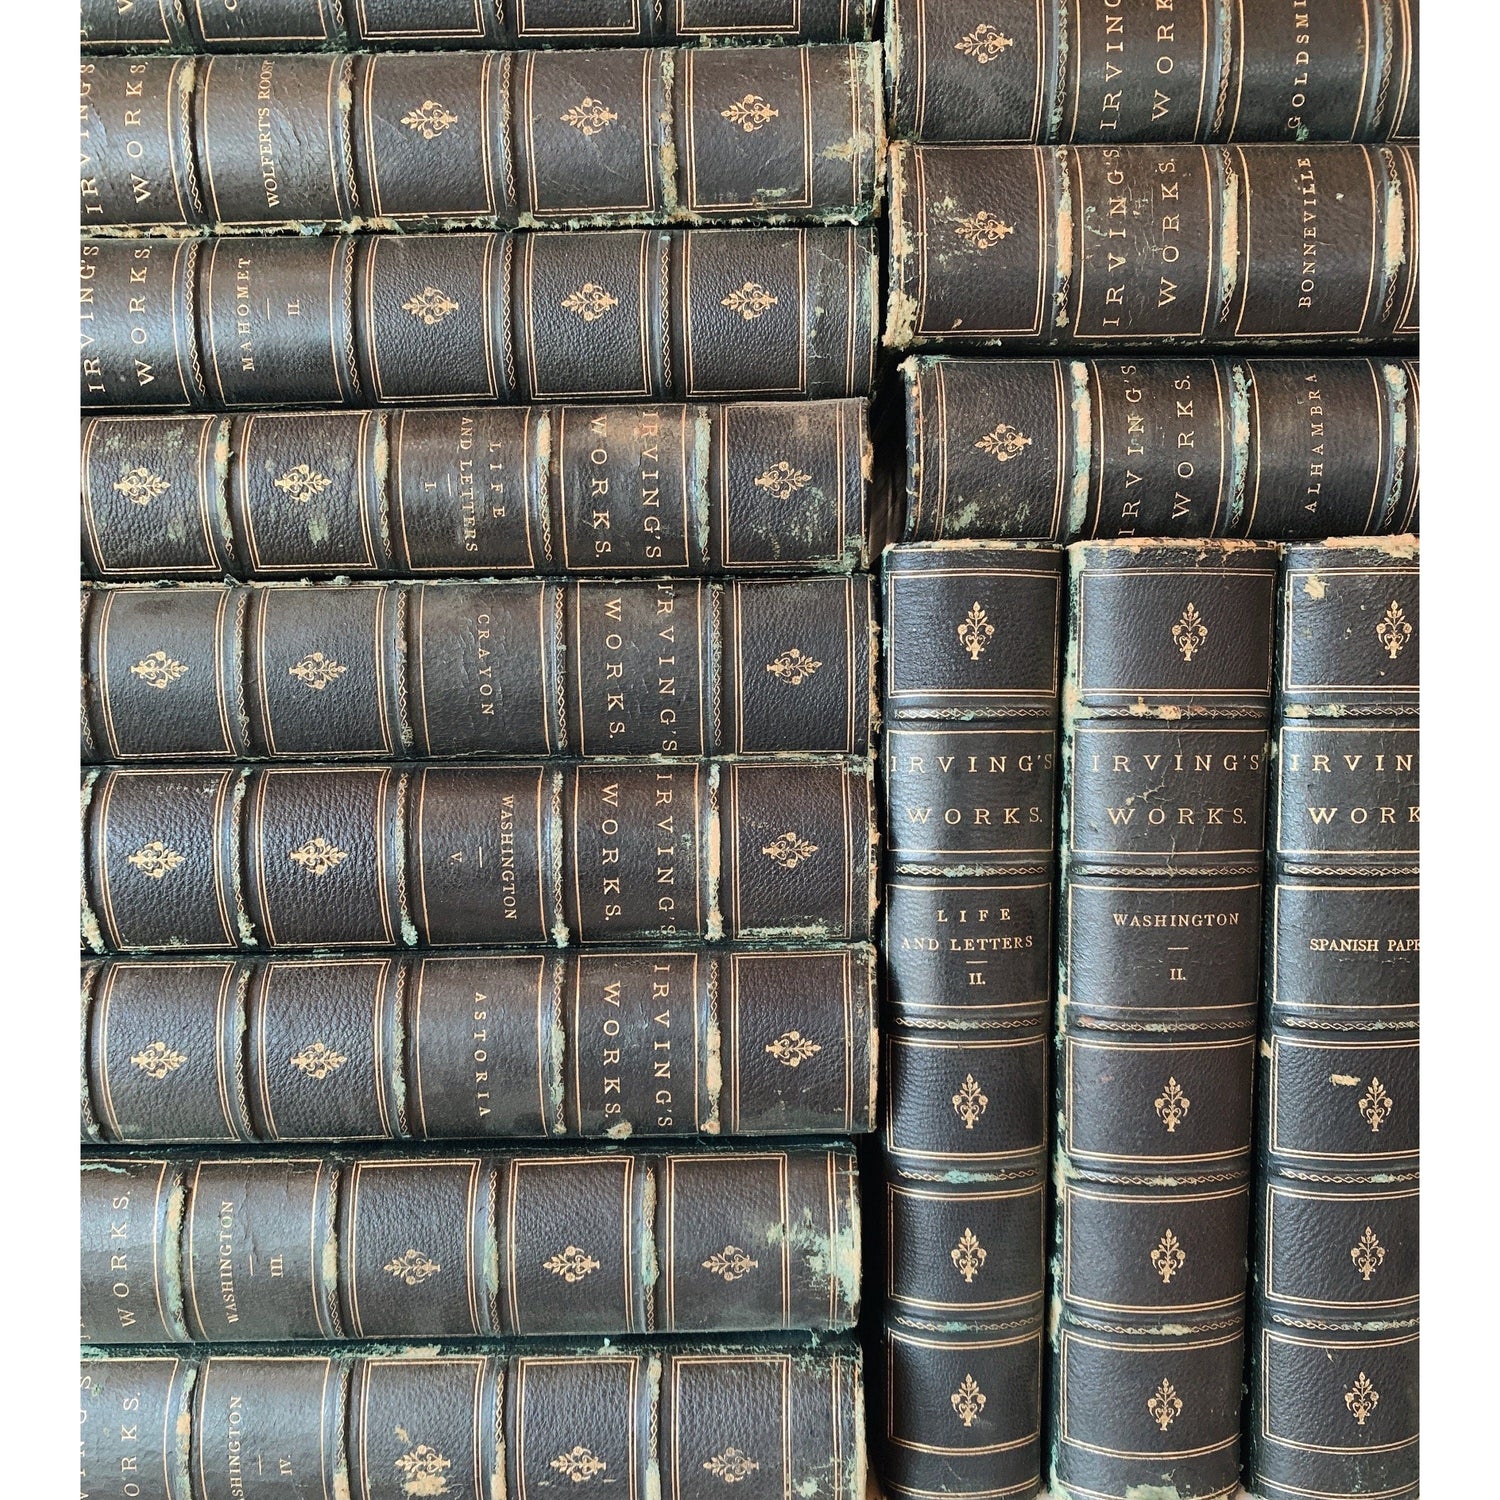 Washington Irving Book Set, Geoffrey Crayon Edition, 1868, Leather-Bound